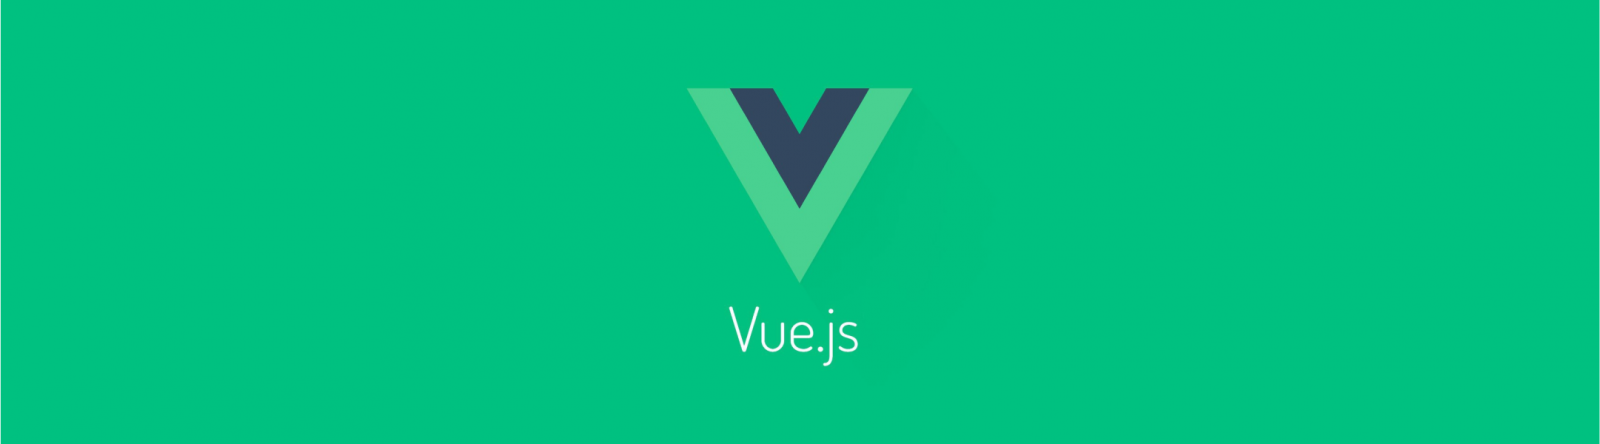 VueJS programming services